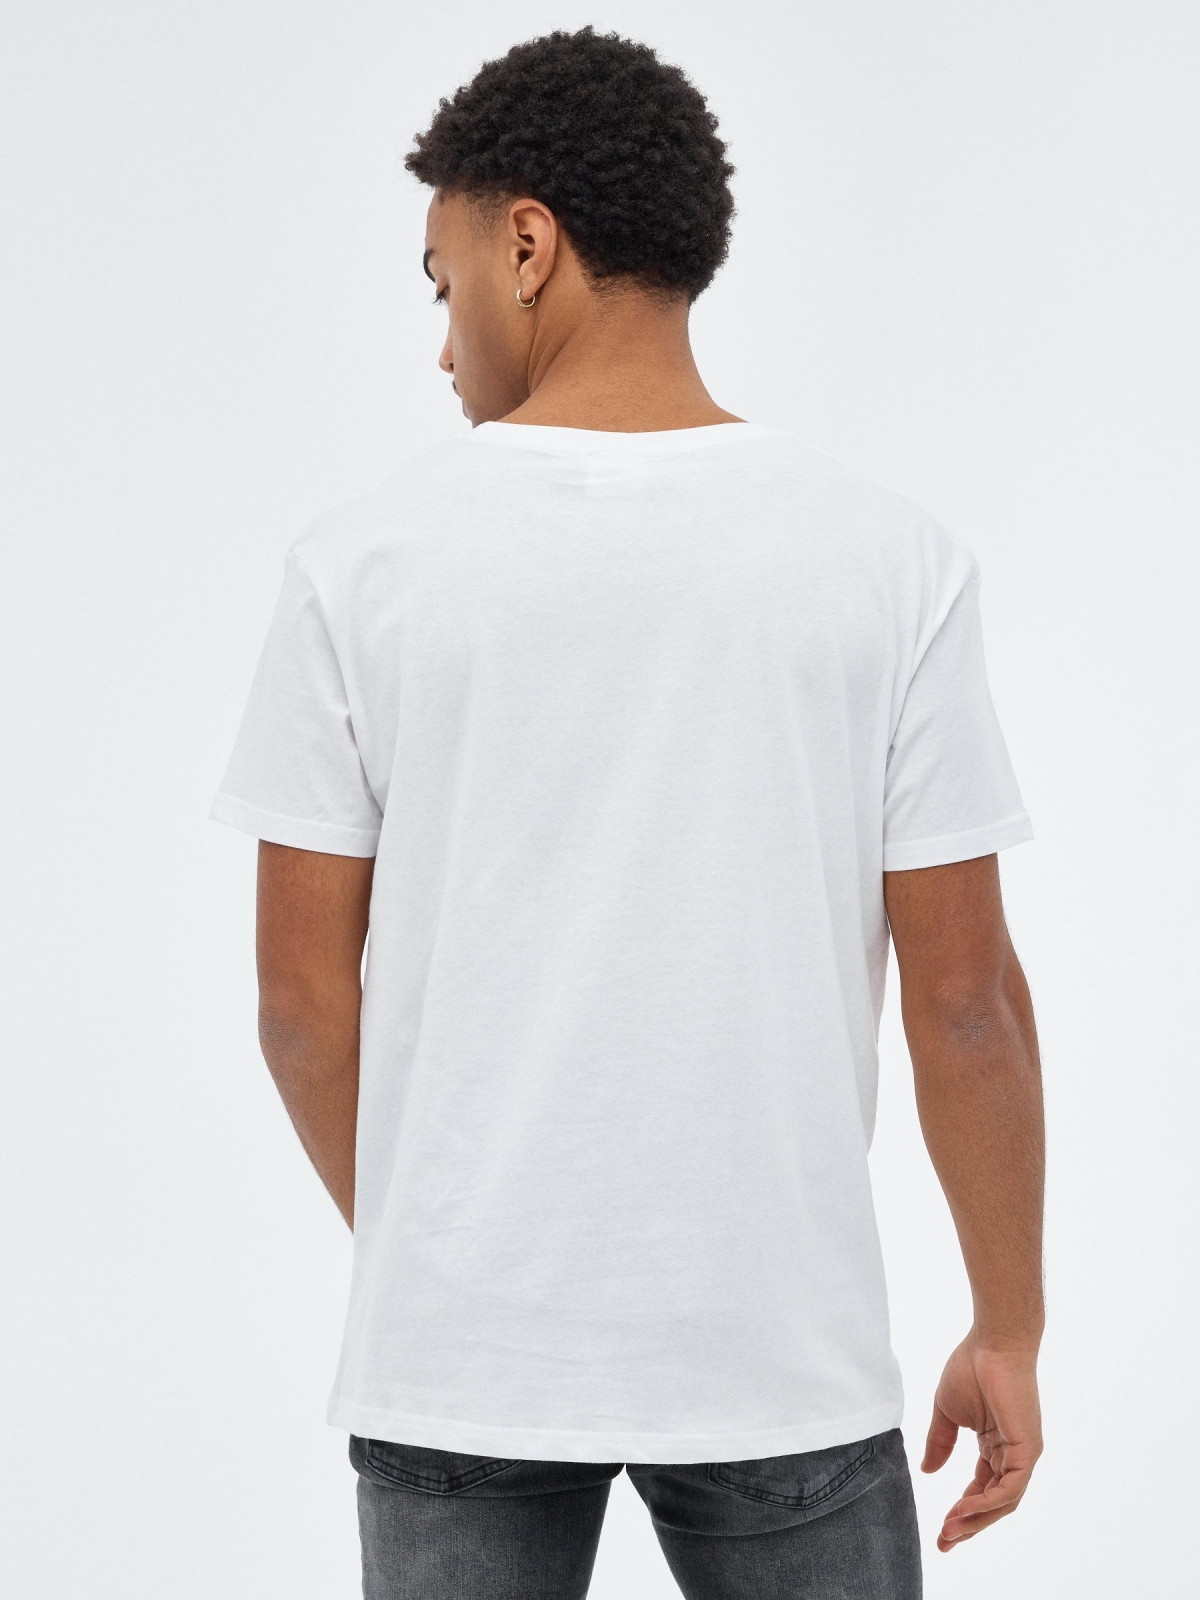 Camiseta blanca Naruto blanco vista media trasera